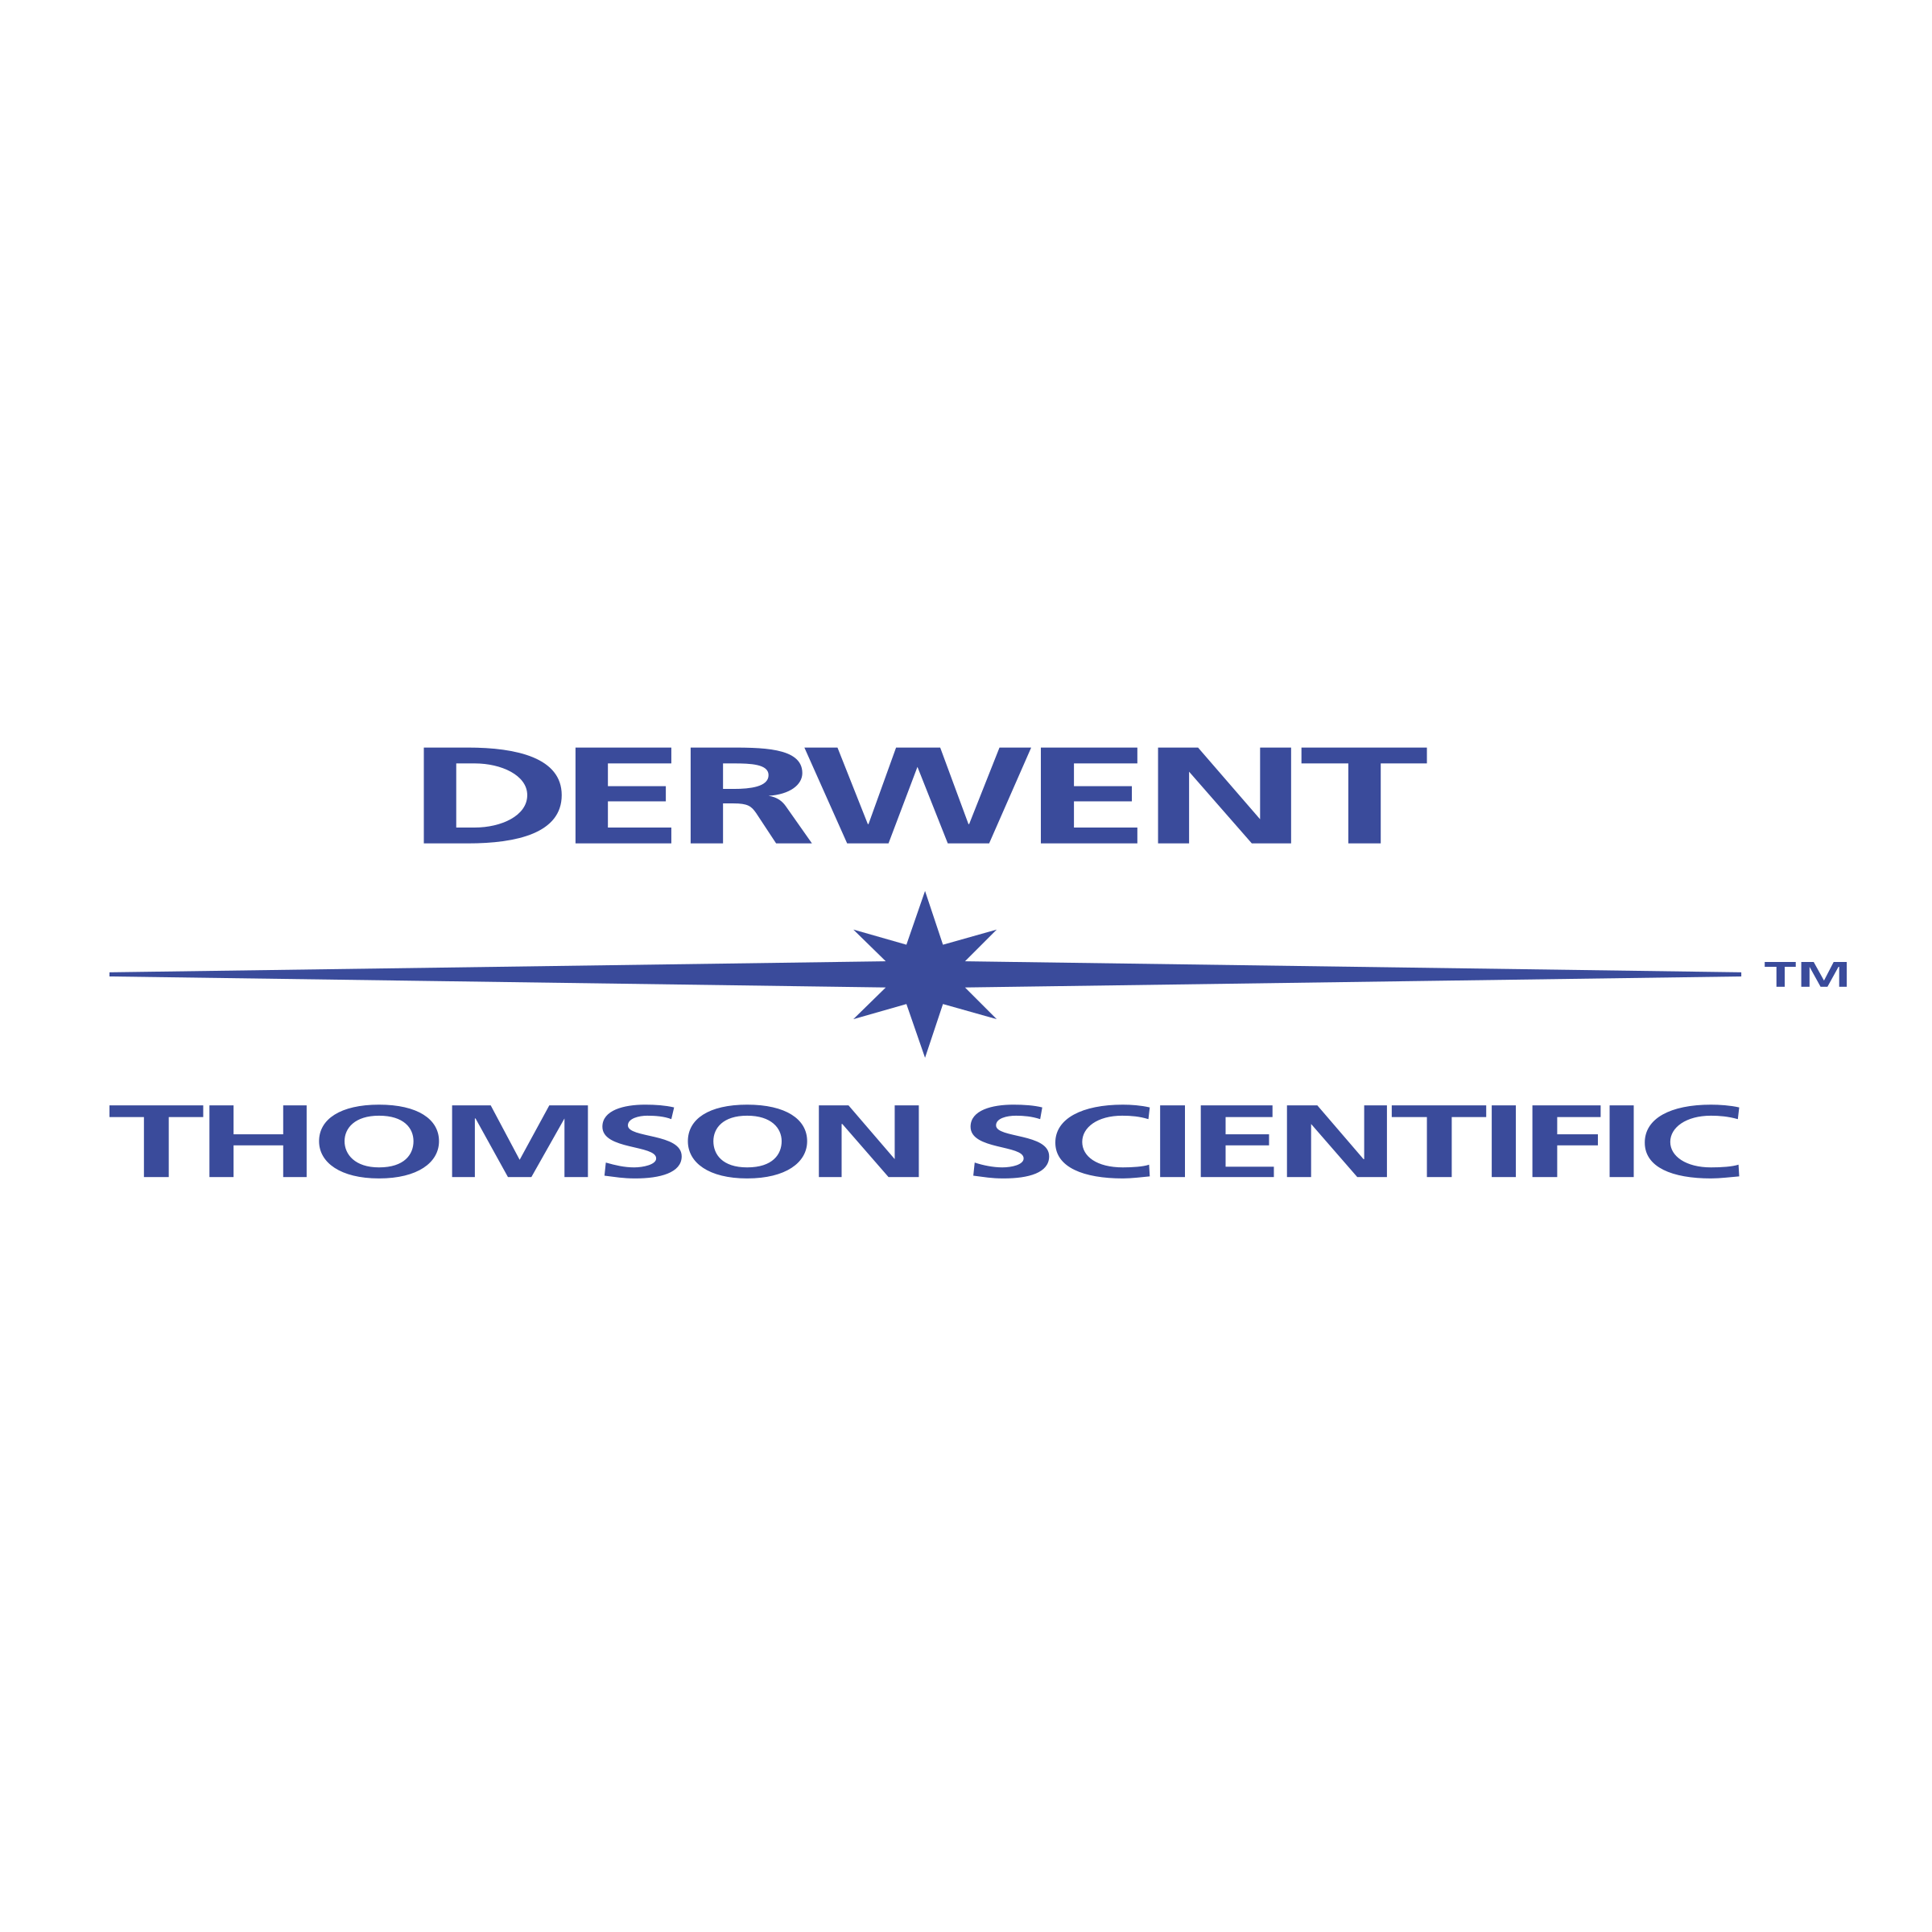 Derwent Logo - Derwent Logo PNG Transparent & SVG Vector